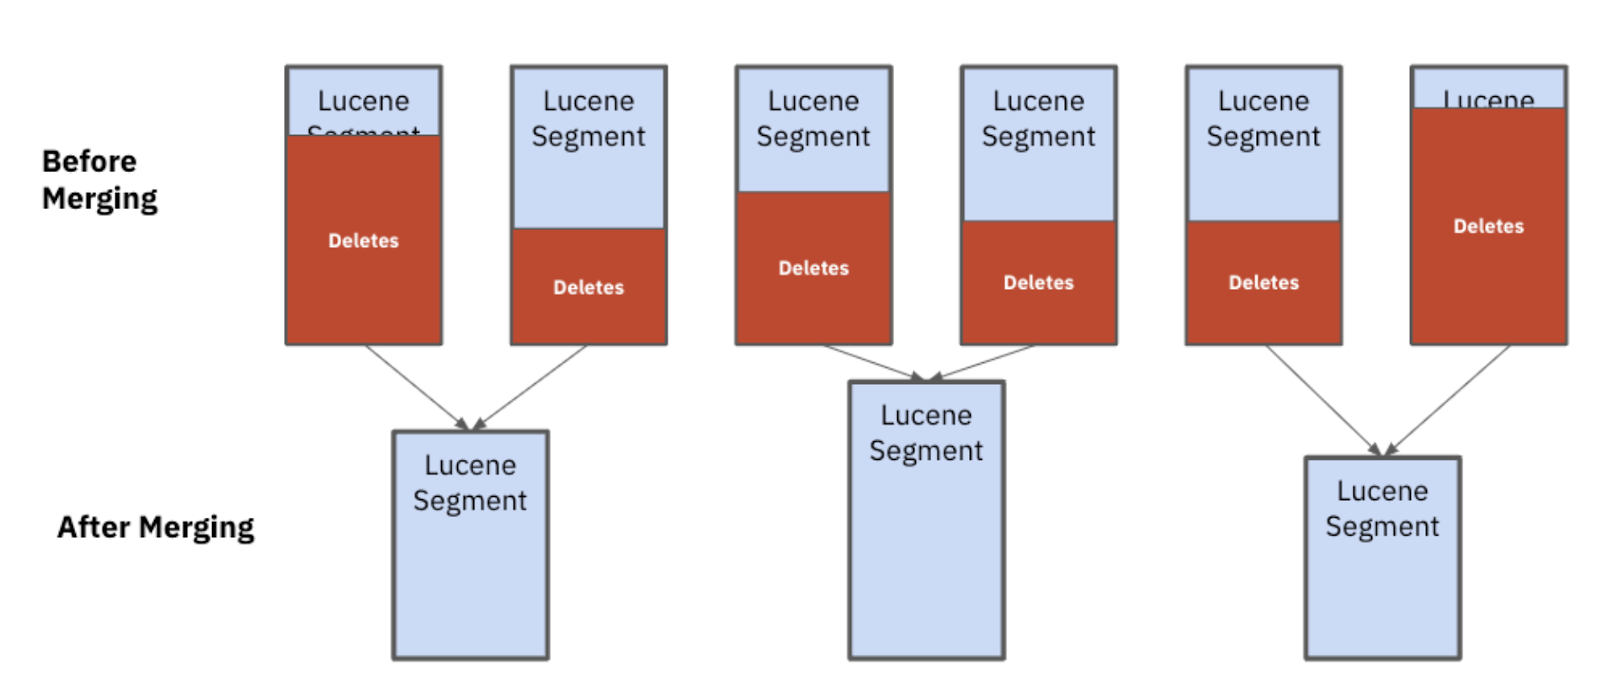 Lucene segments graph